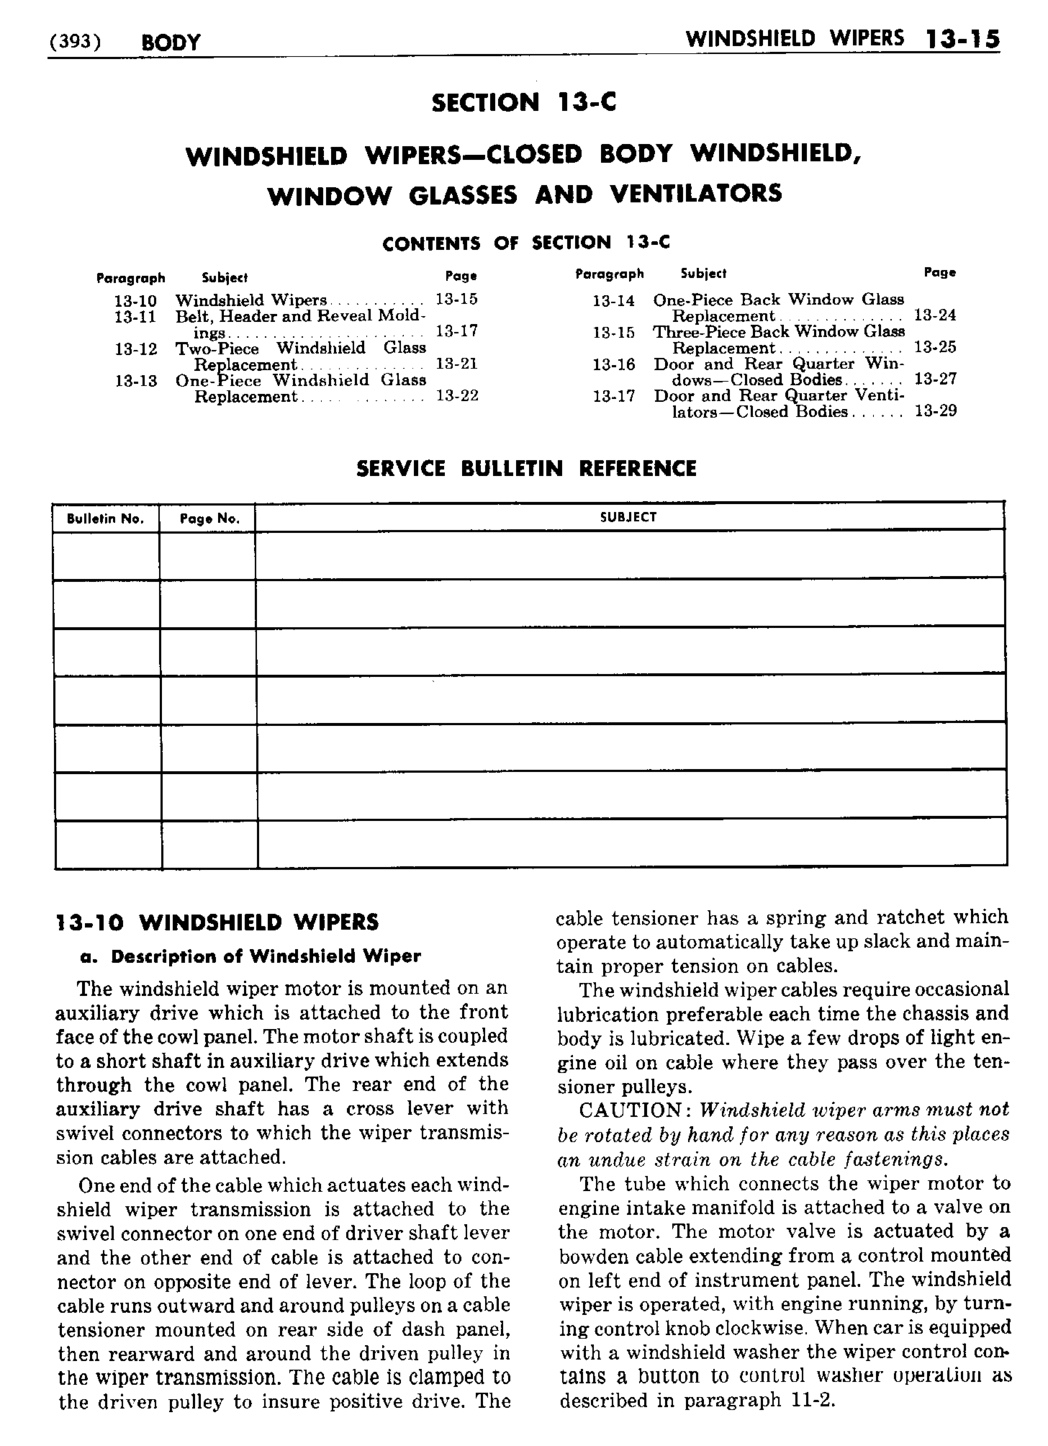 n_14 1950 Buick Shop Manual - Body-015-015.jpg